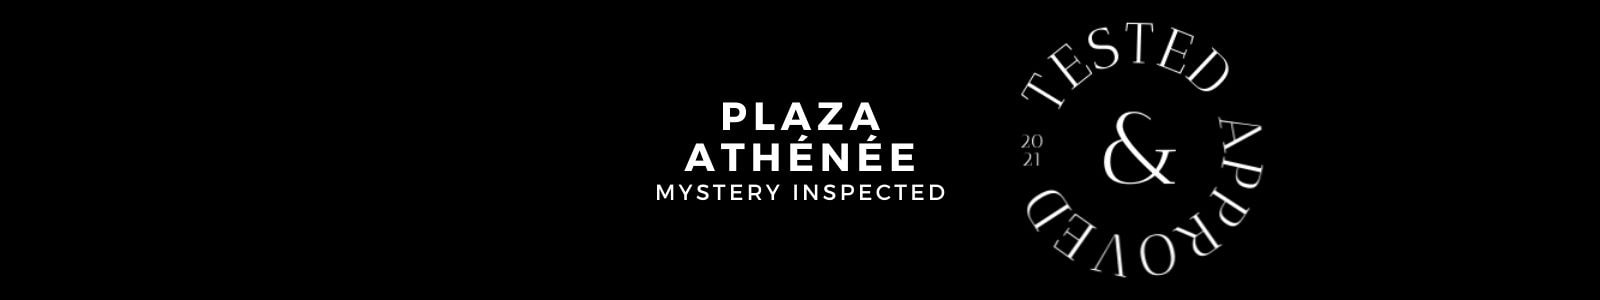 Plaza Athénée review